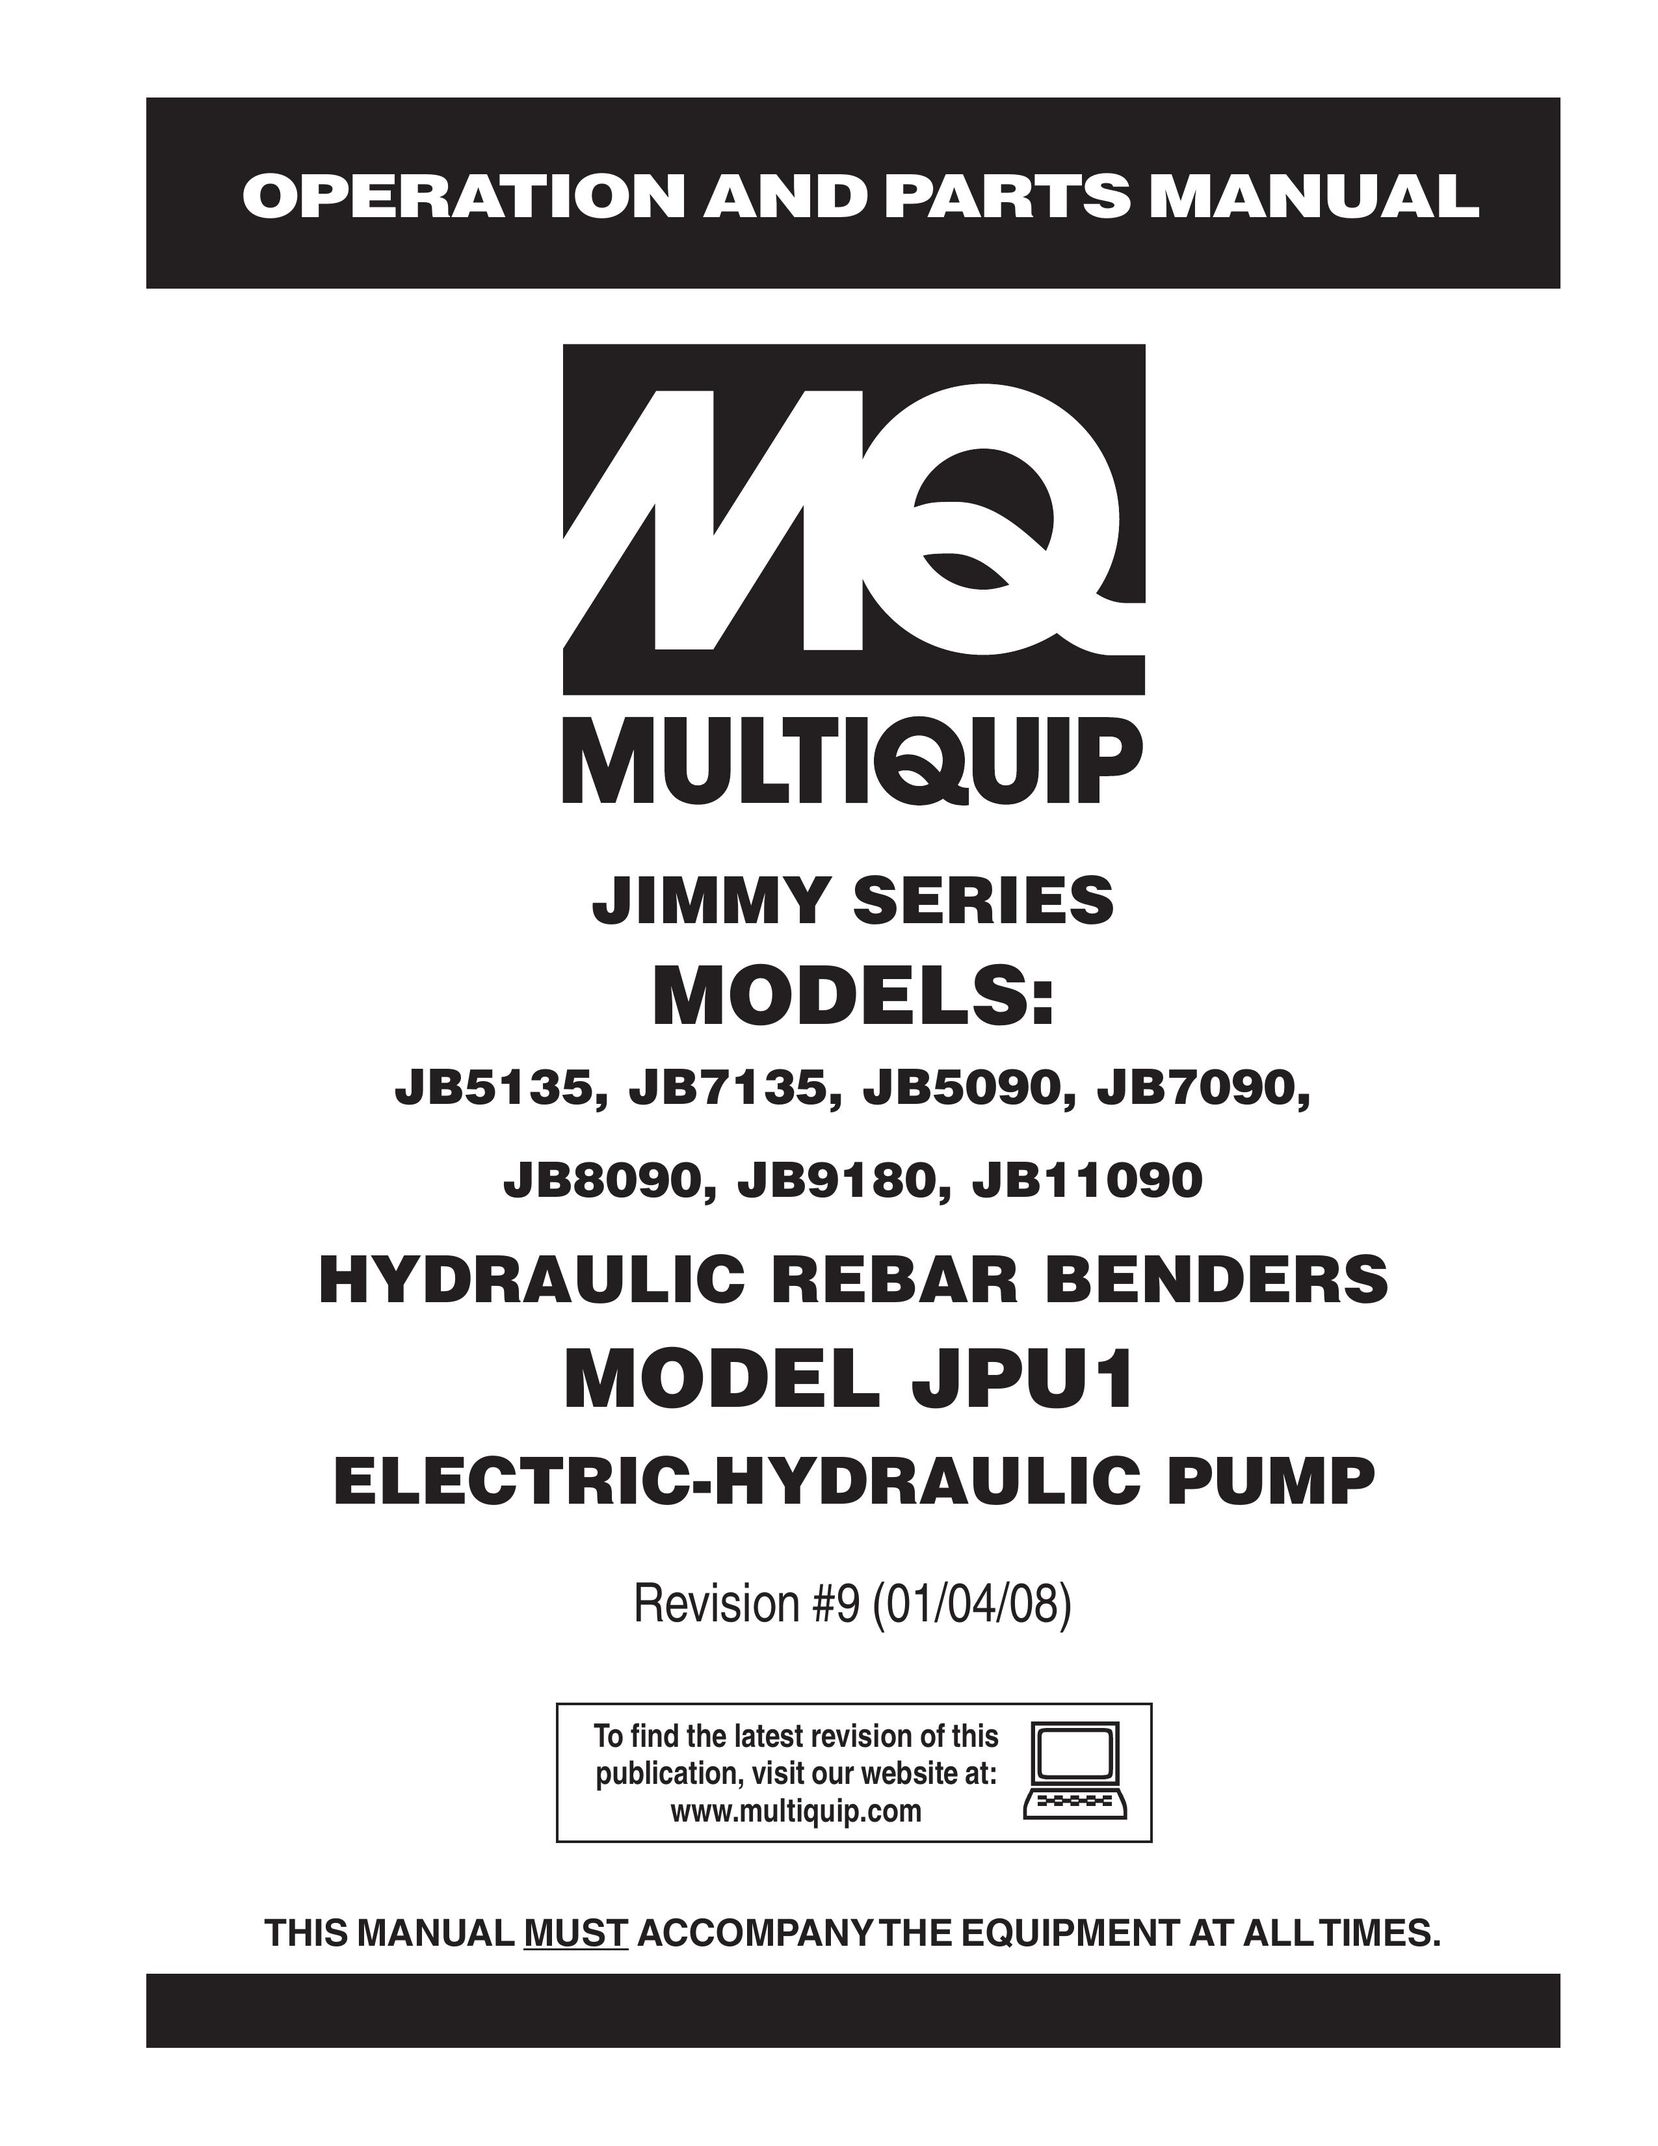 Multiquip JB9180 Heat Pump User Manual